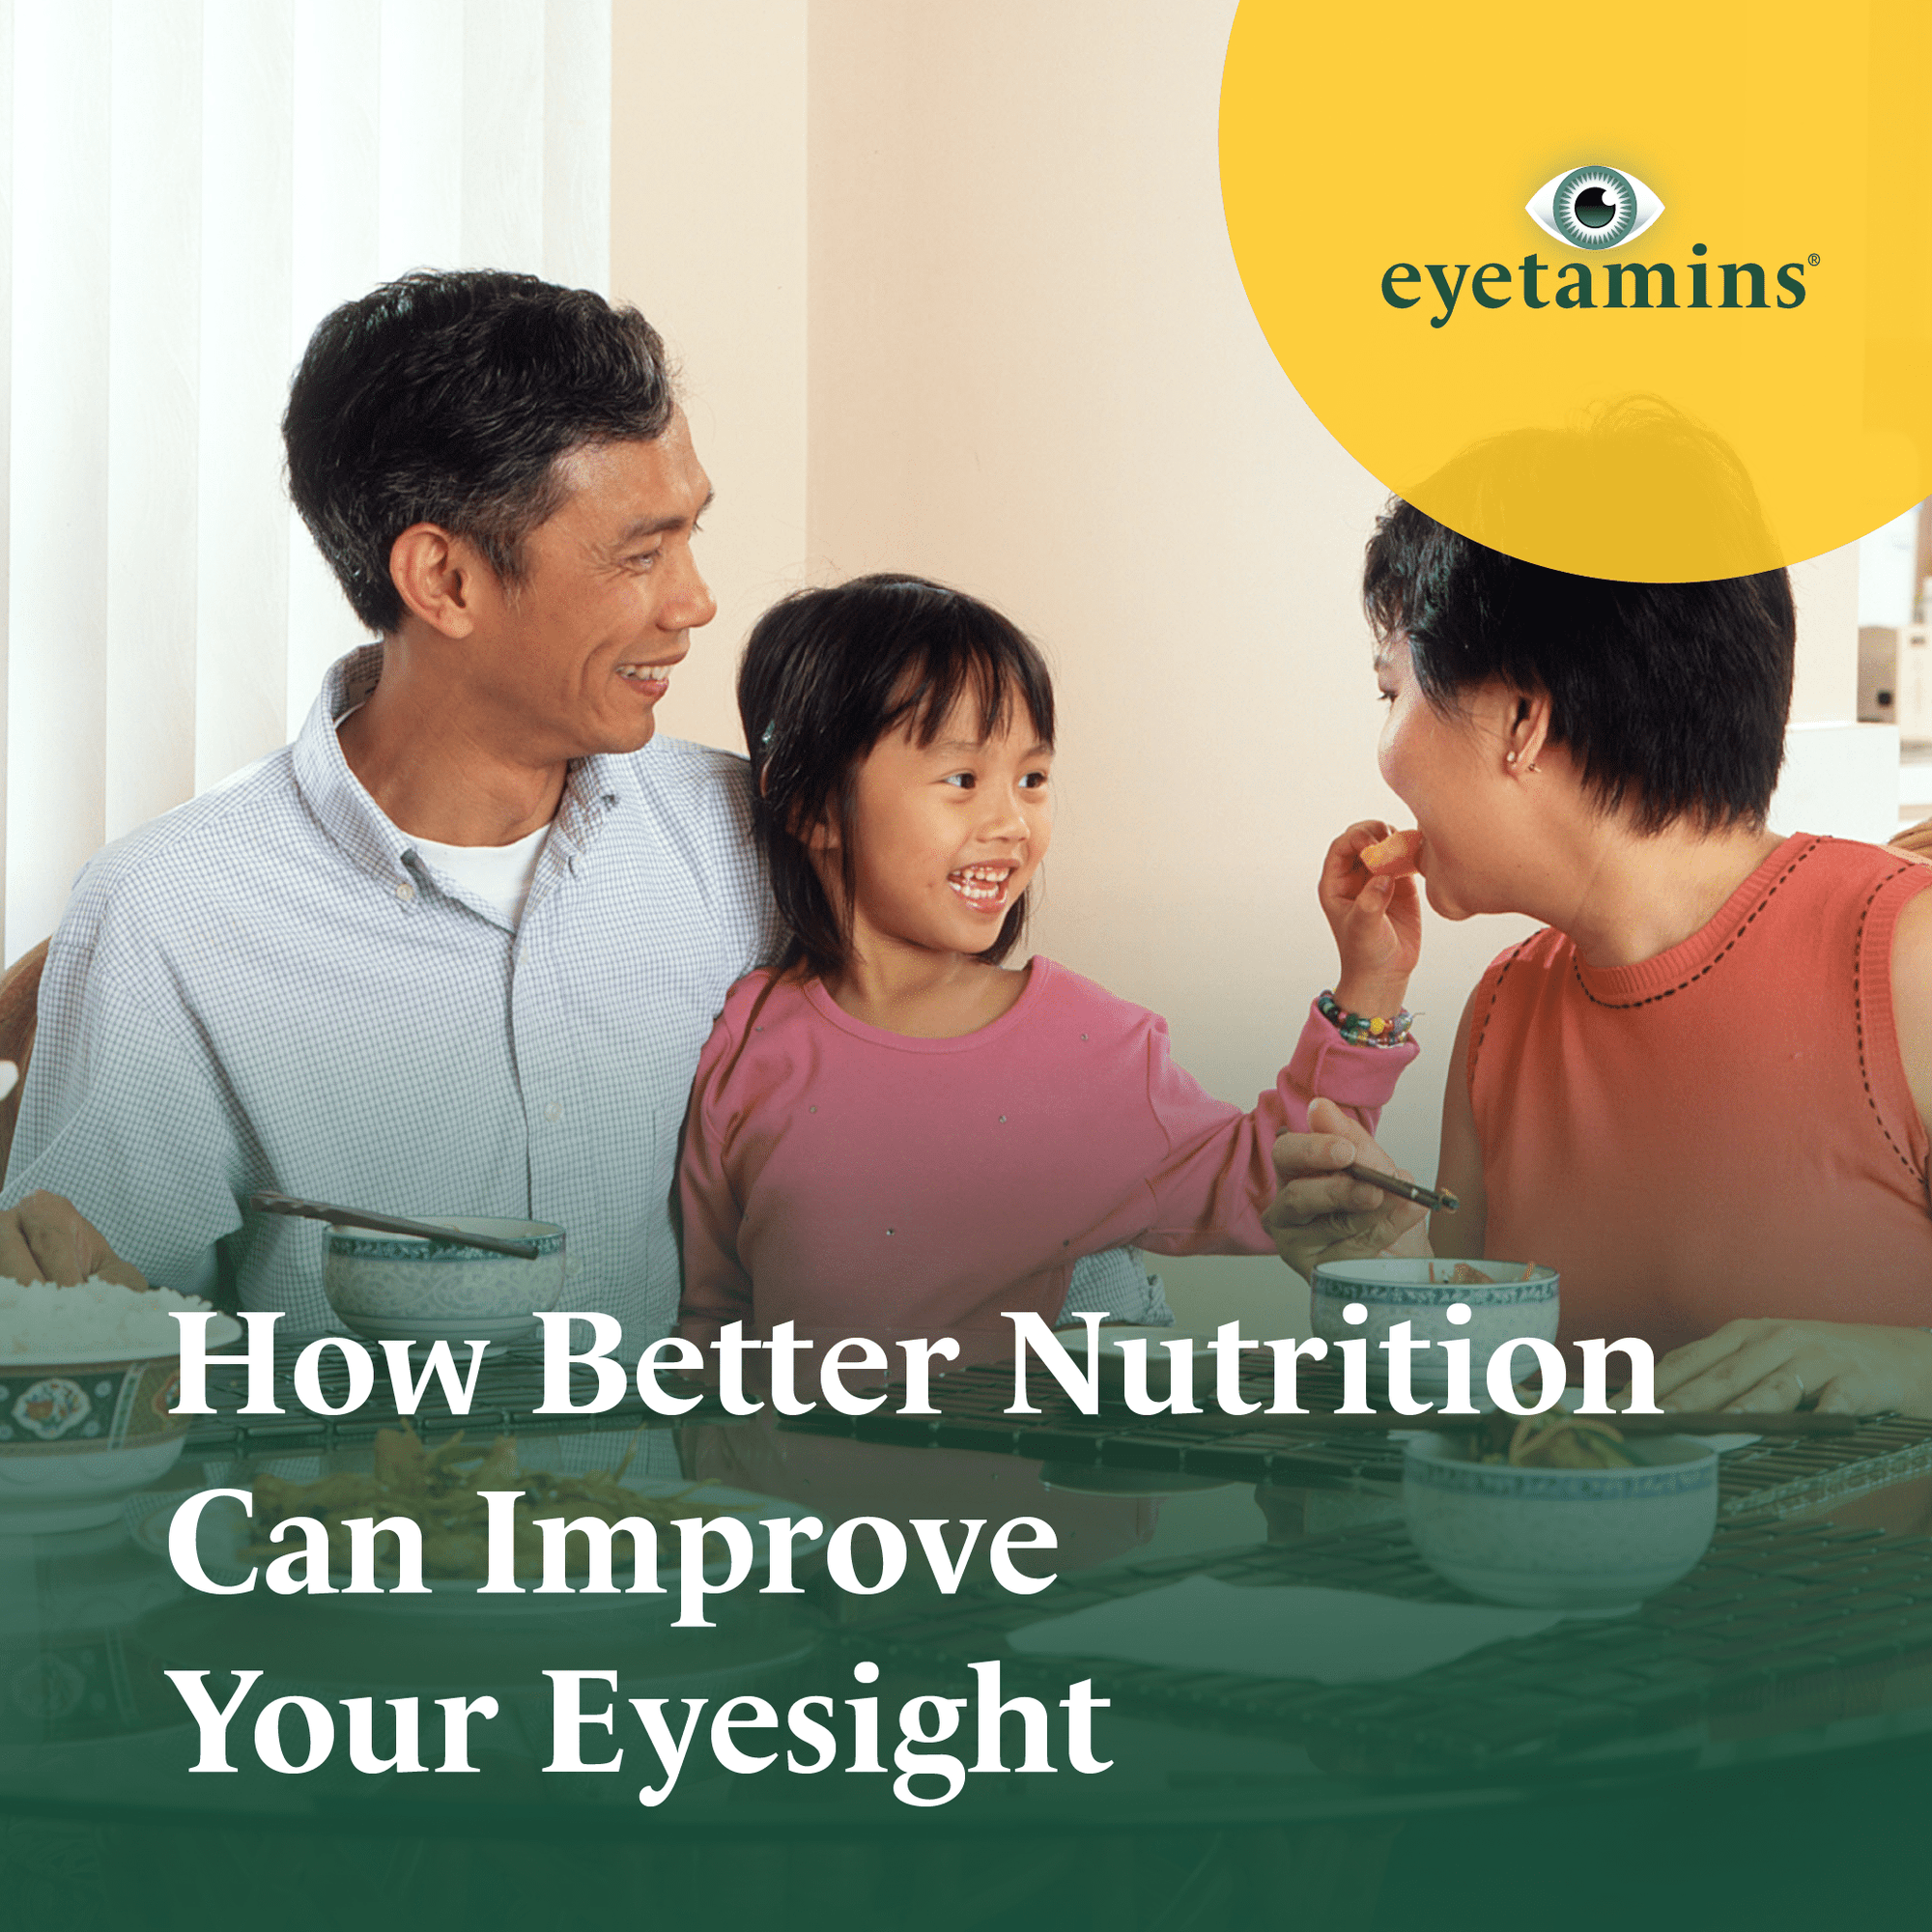 Eyetamins - How Better Nutrition Can Improve Your Eyesight